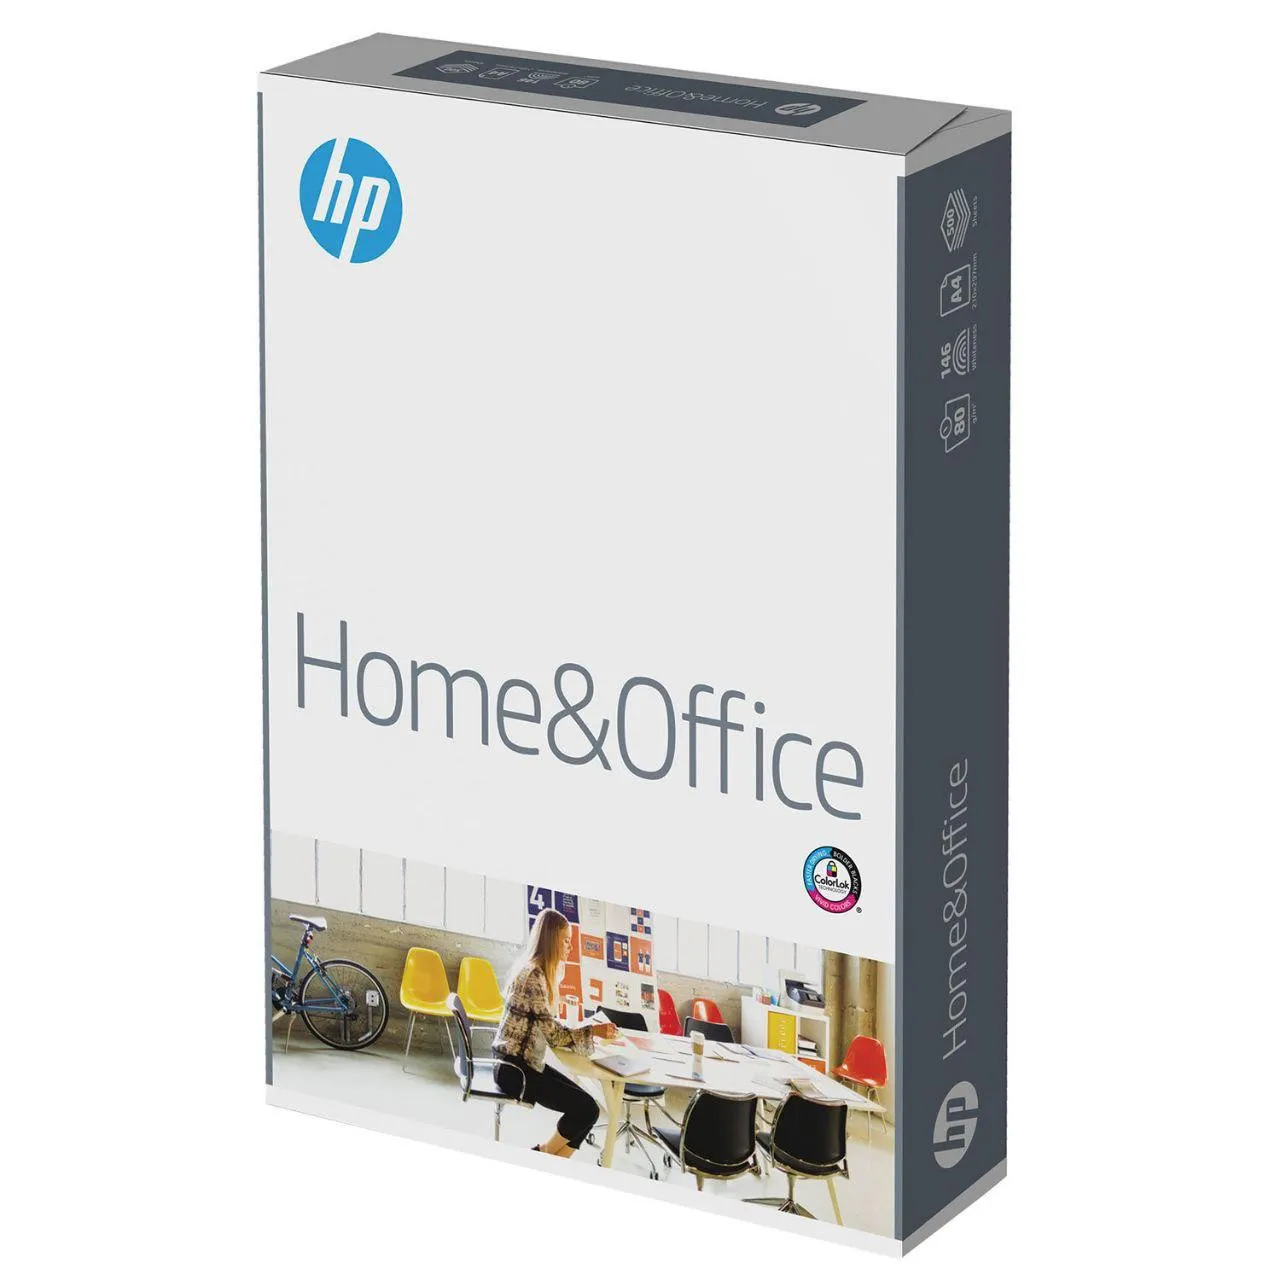 Бумага ксероксная А4 HP Home&Office  80 гр., 500 л, 2,5 кг, класс С+#1